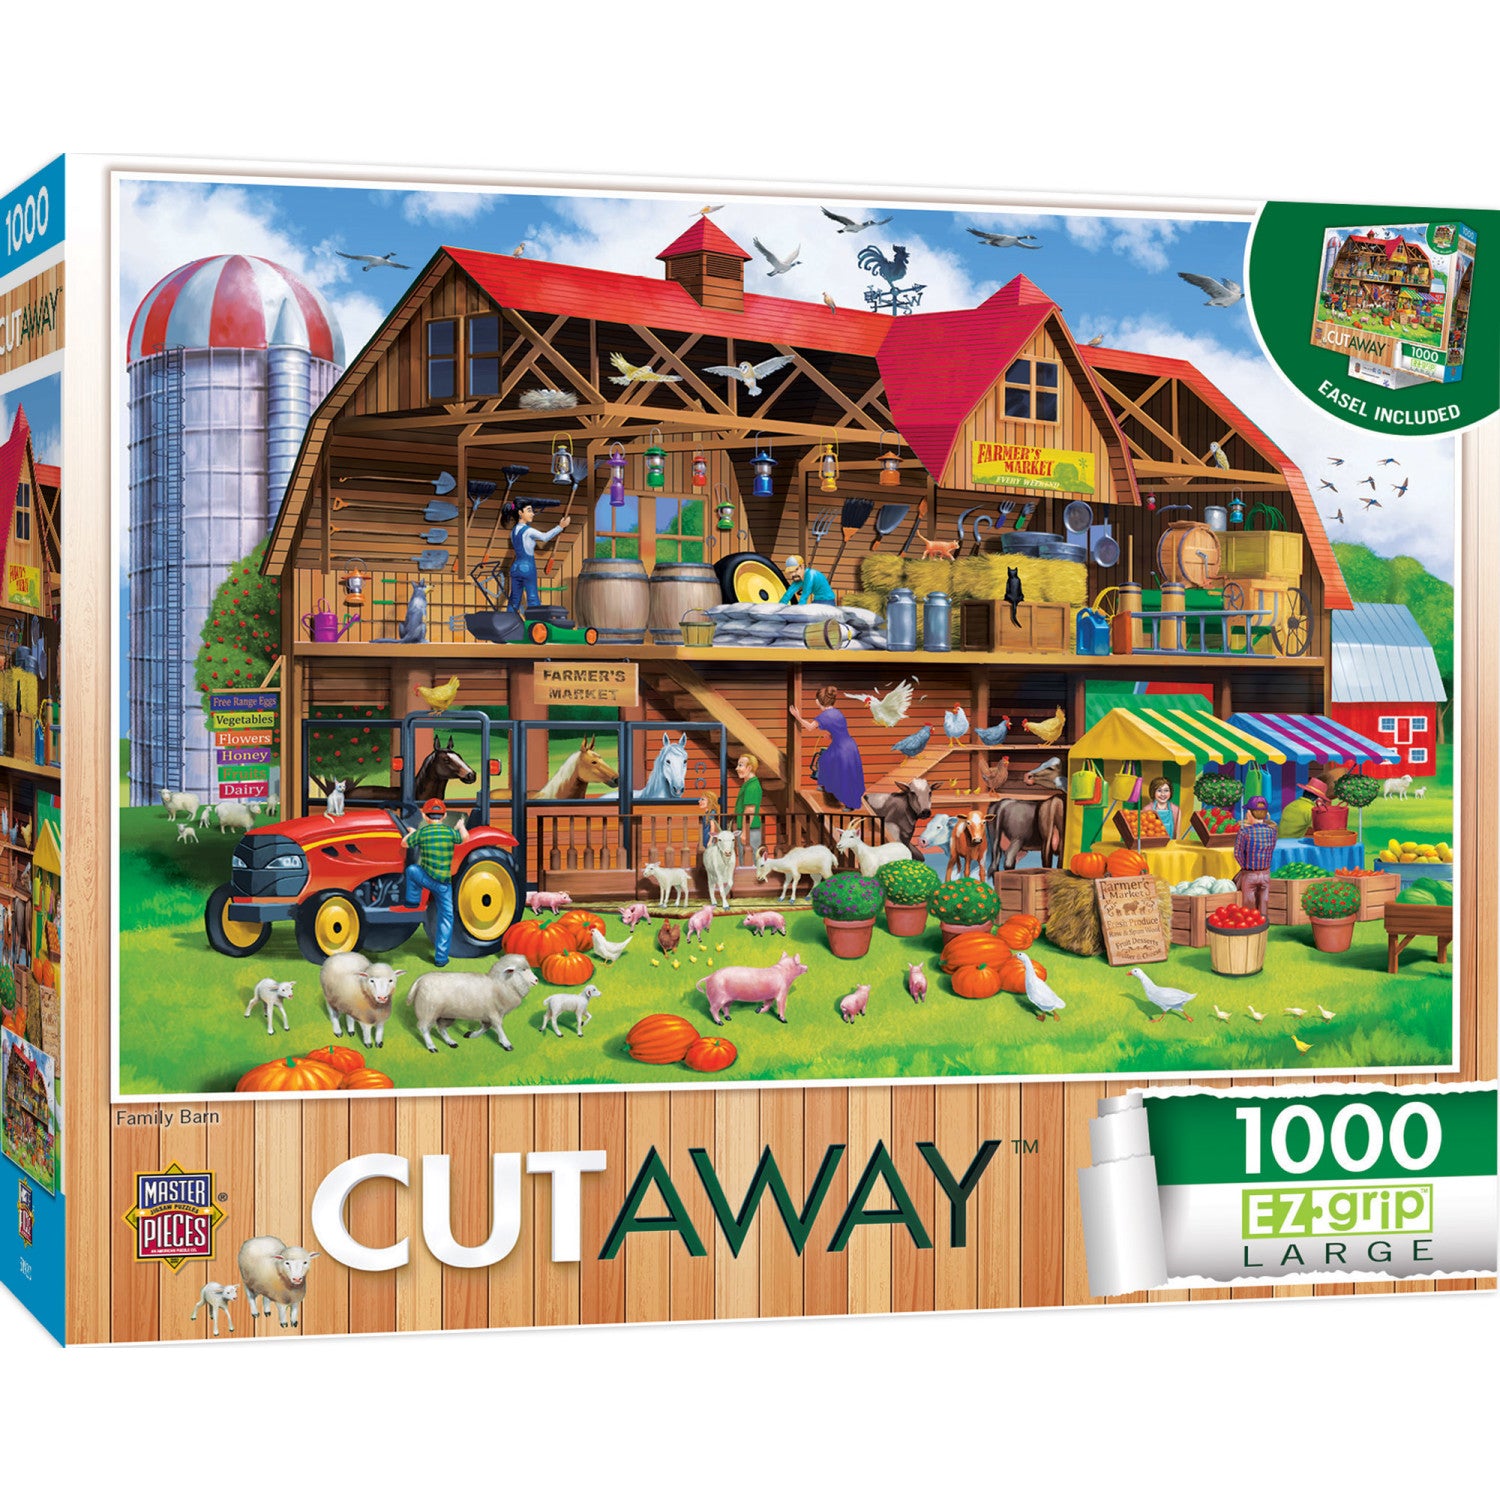 Cutaway - Family Barn 1000 Piece EZ Grip Jigsaw Puzzle